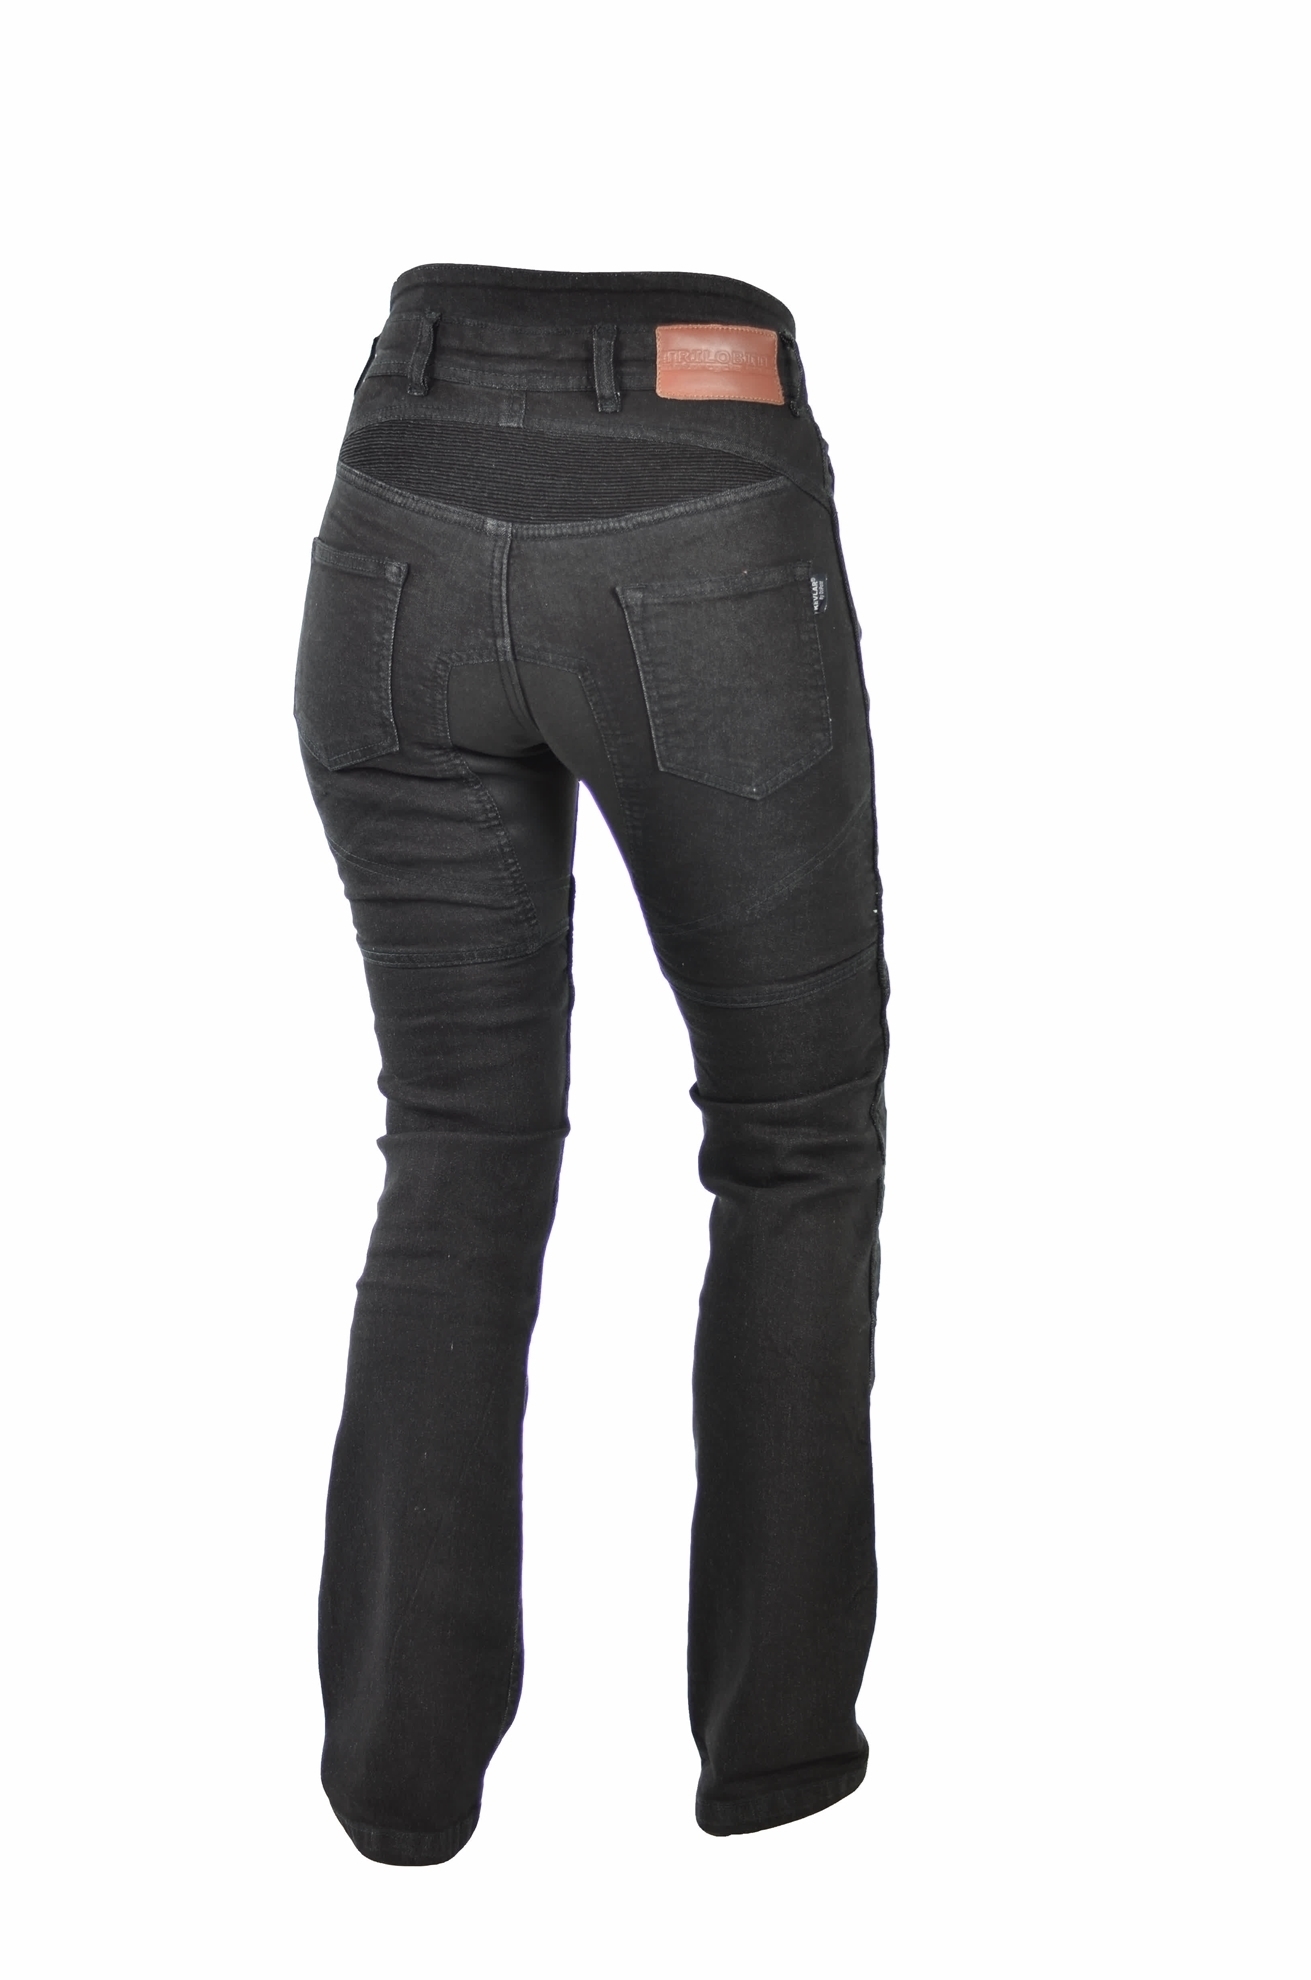 Ženske motoristične jeans hlače Trilobite PARADO 661 "regular fit", črne